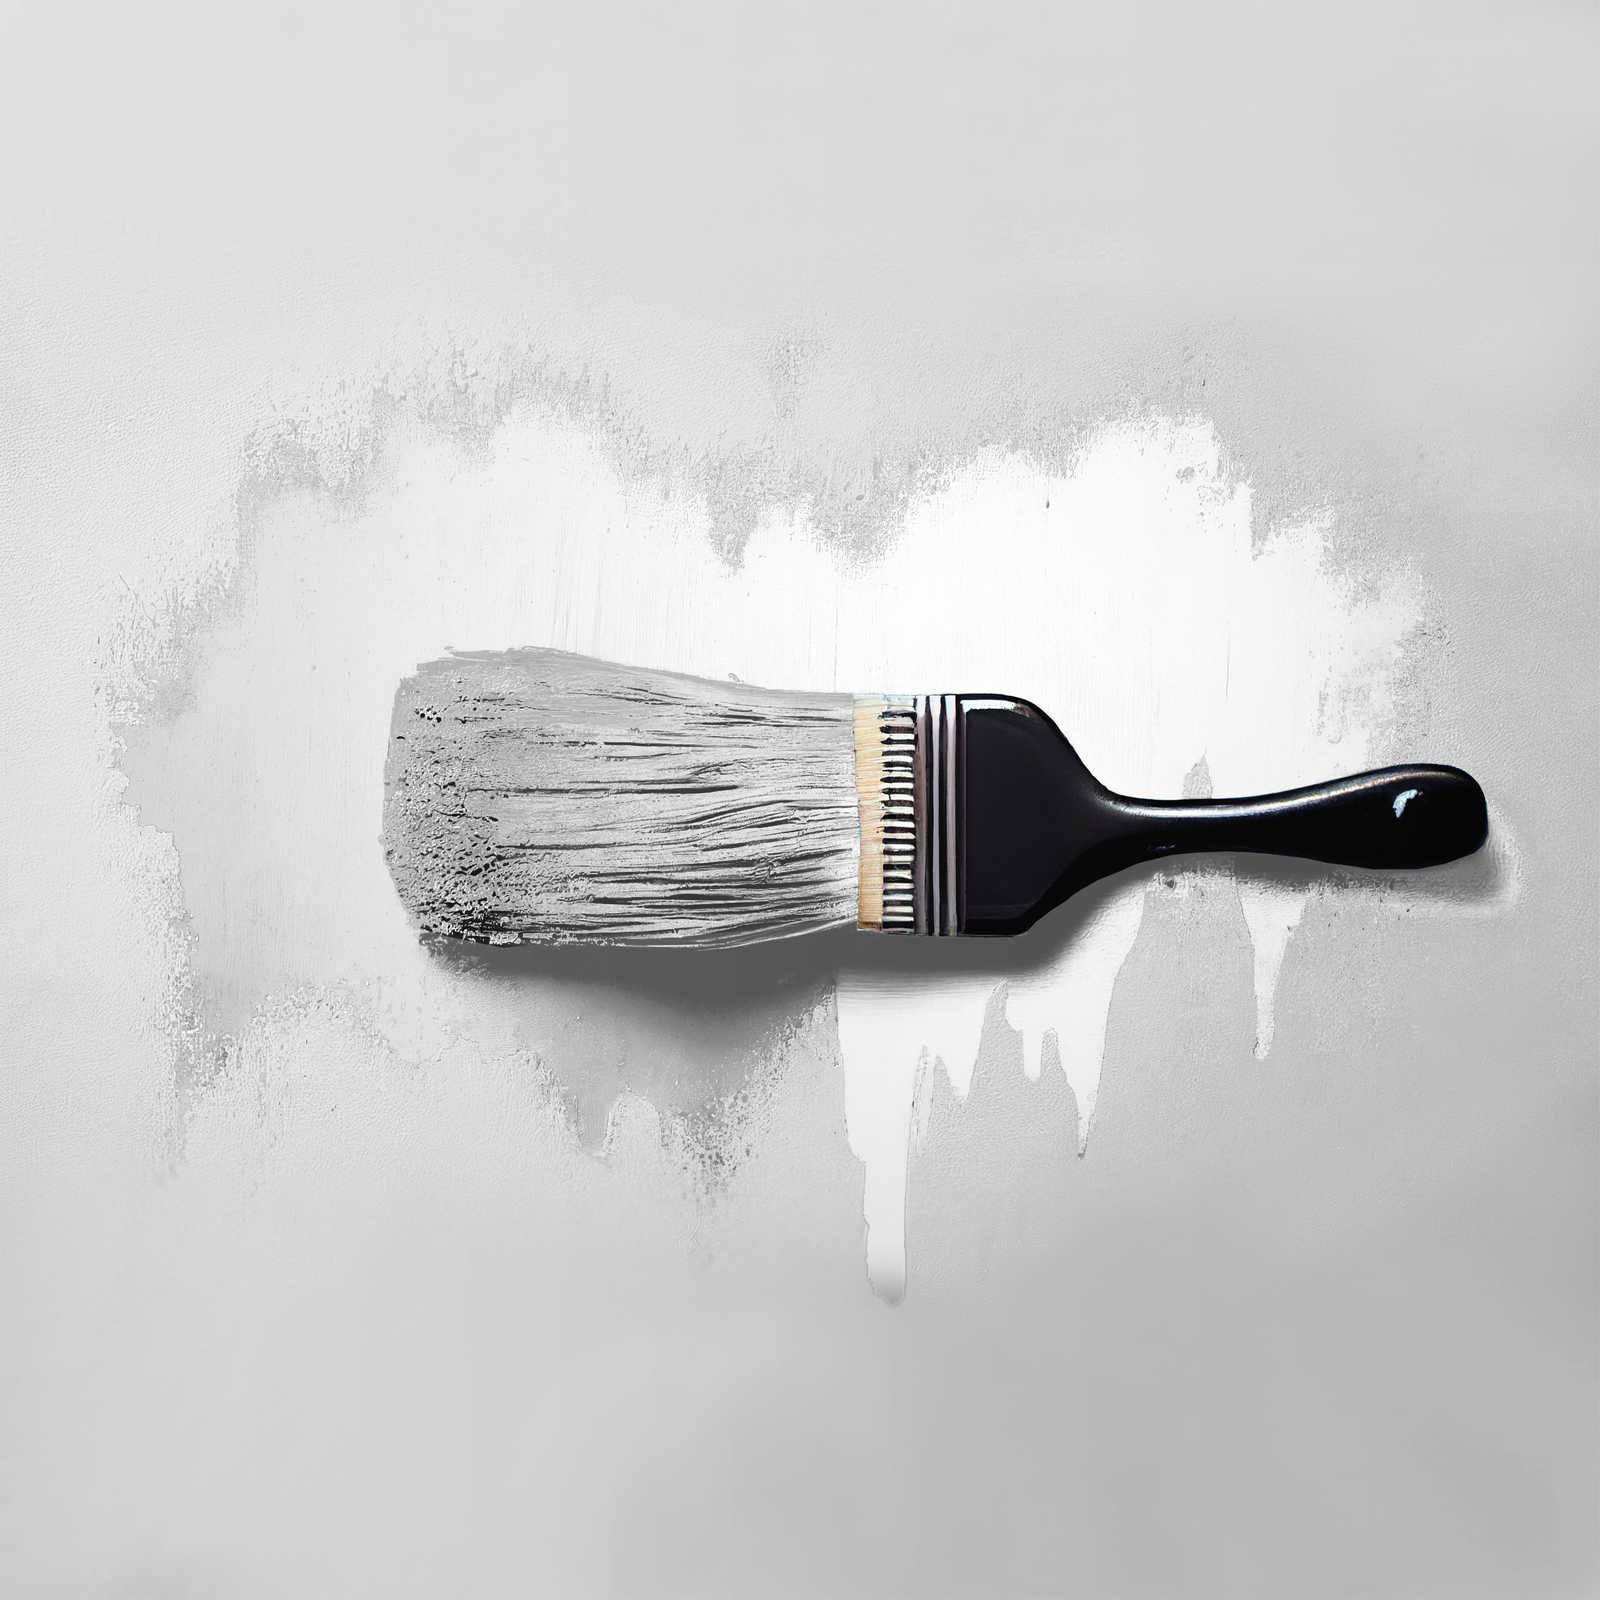             Pittura murale TCK1000 »Melting Marshmellow« in bianco neutro – 5,0 litri
        